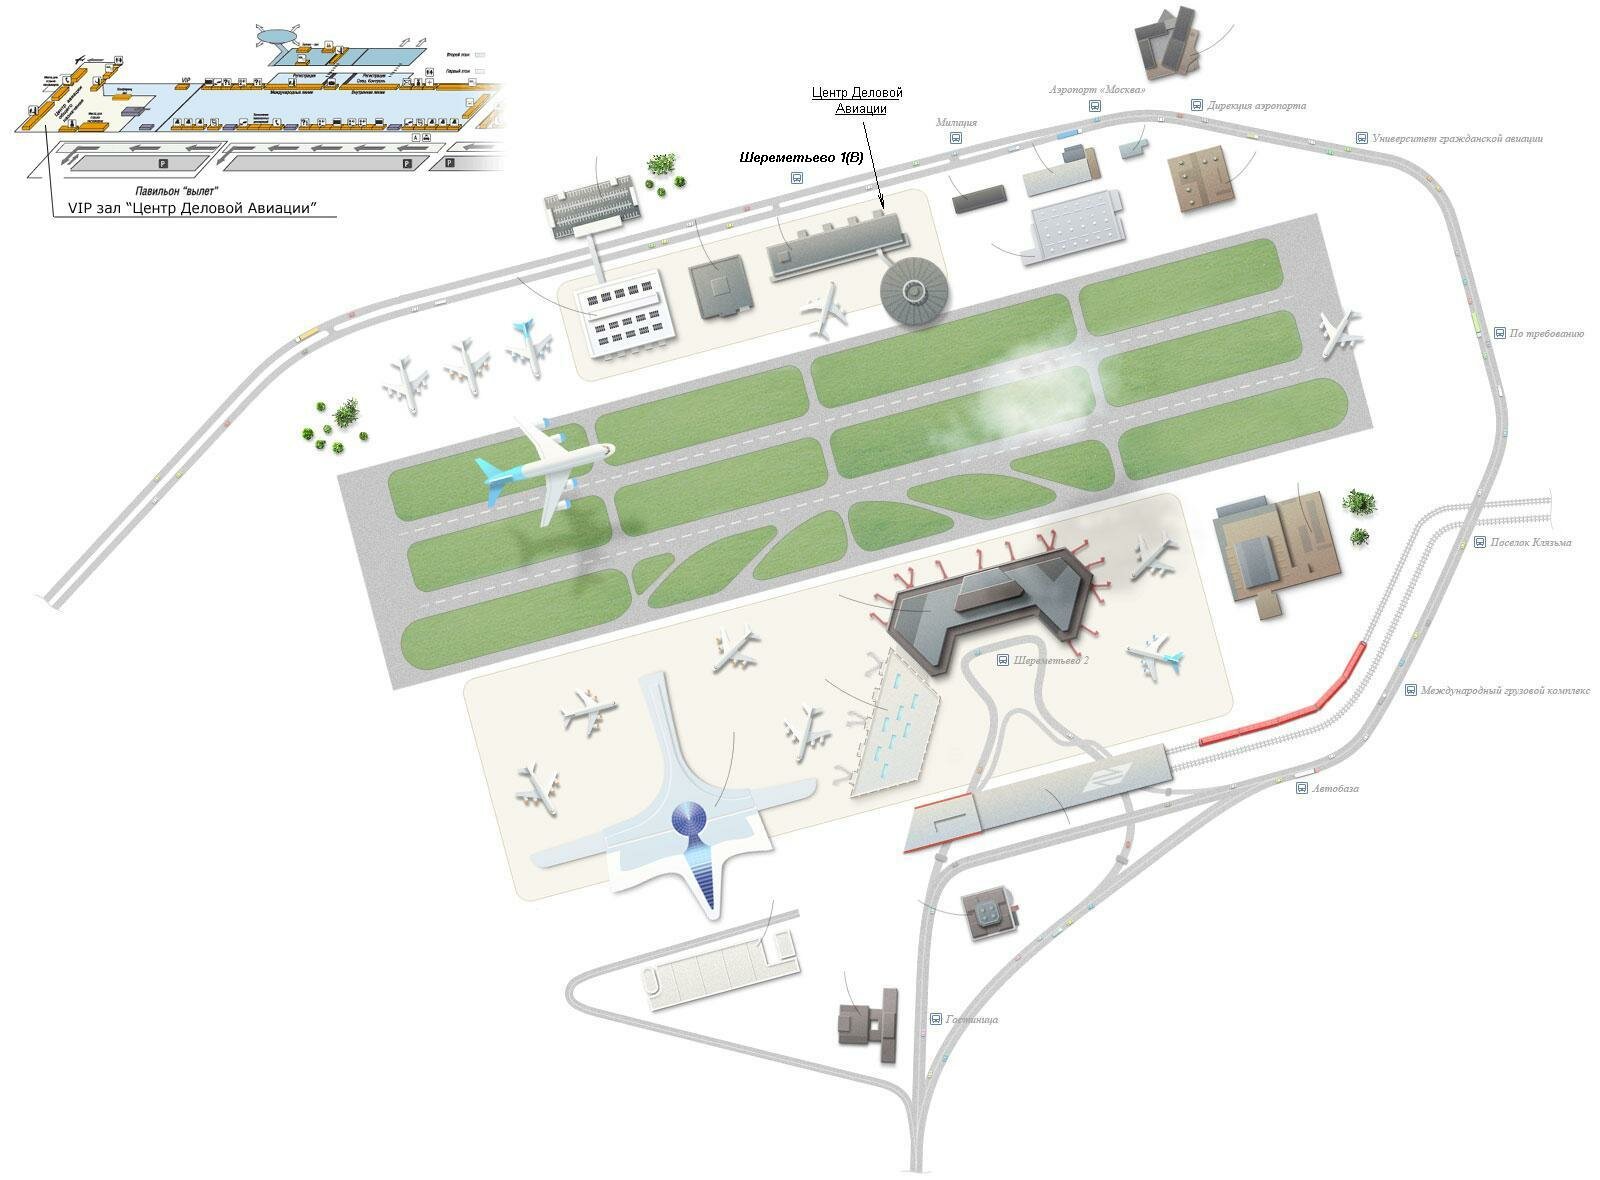 Схема подьезда к терминалу Шереметьево ЦДА